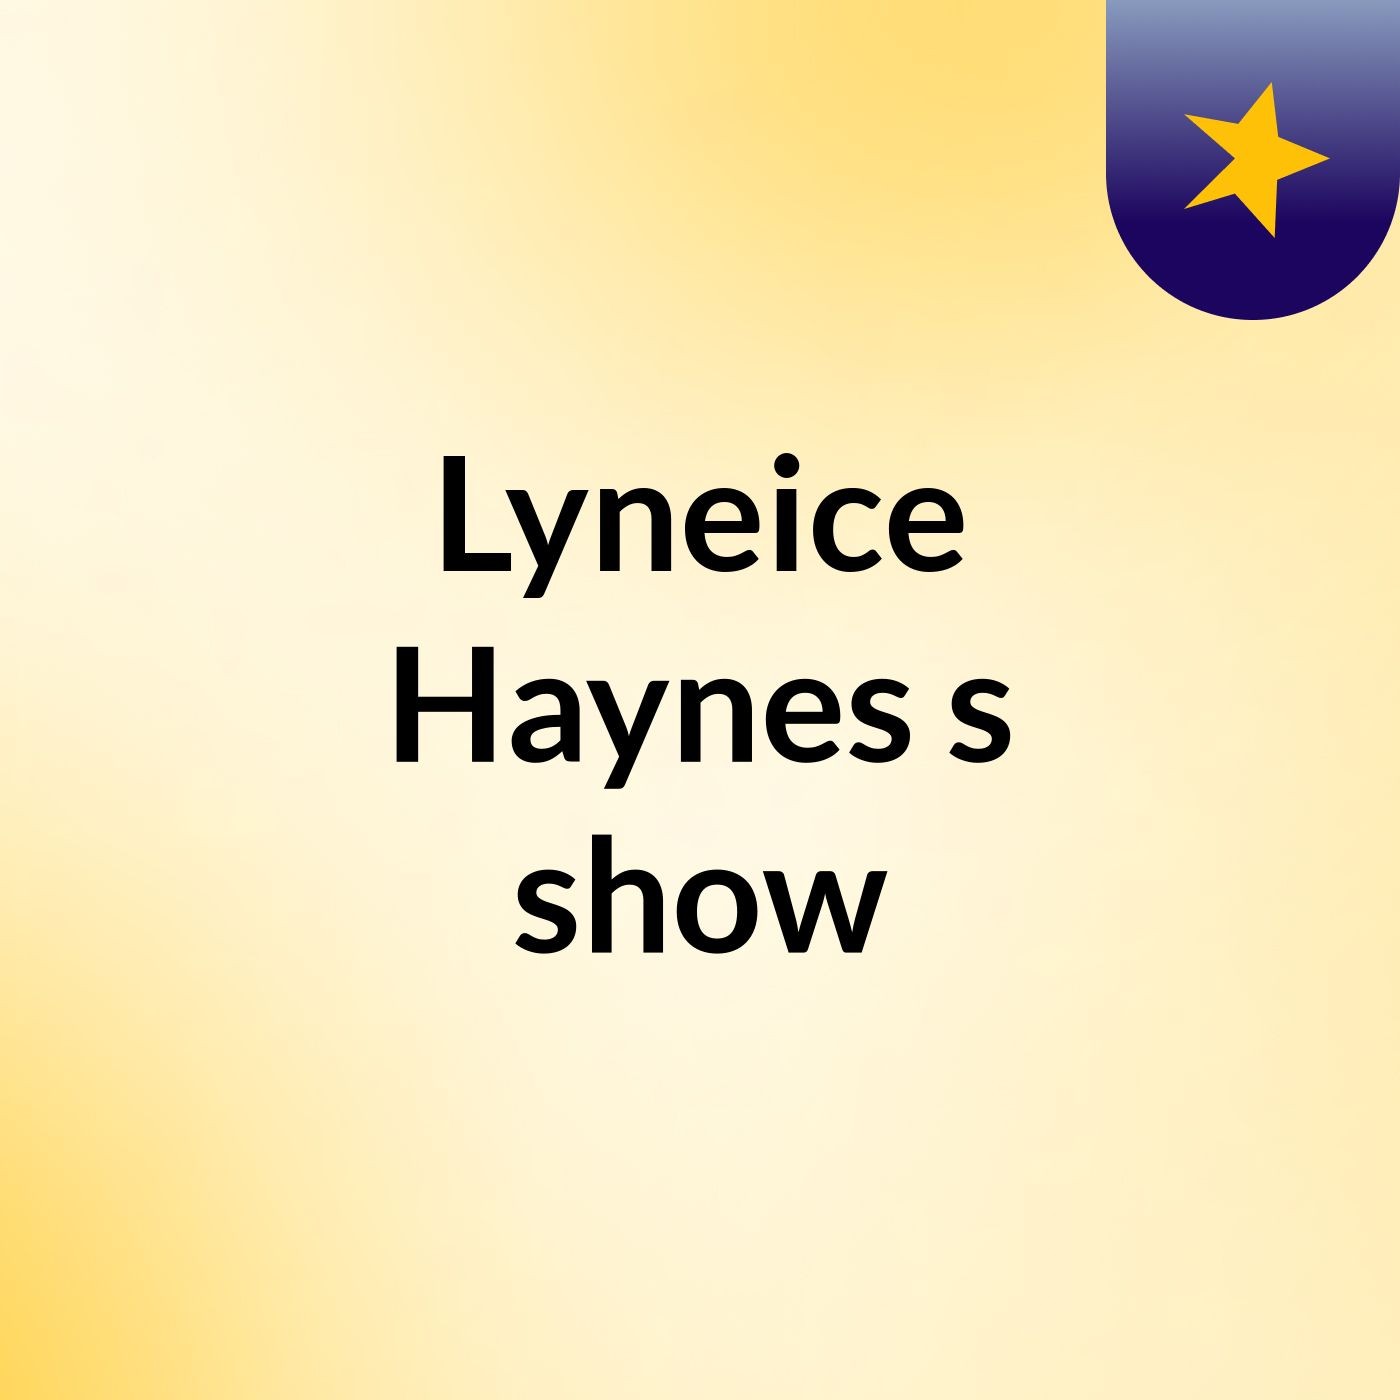 Lyneice Haynes's show